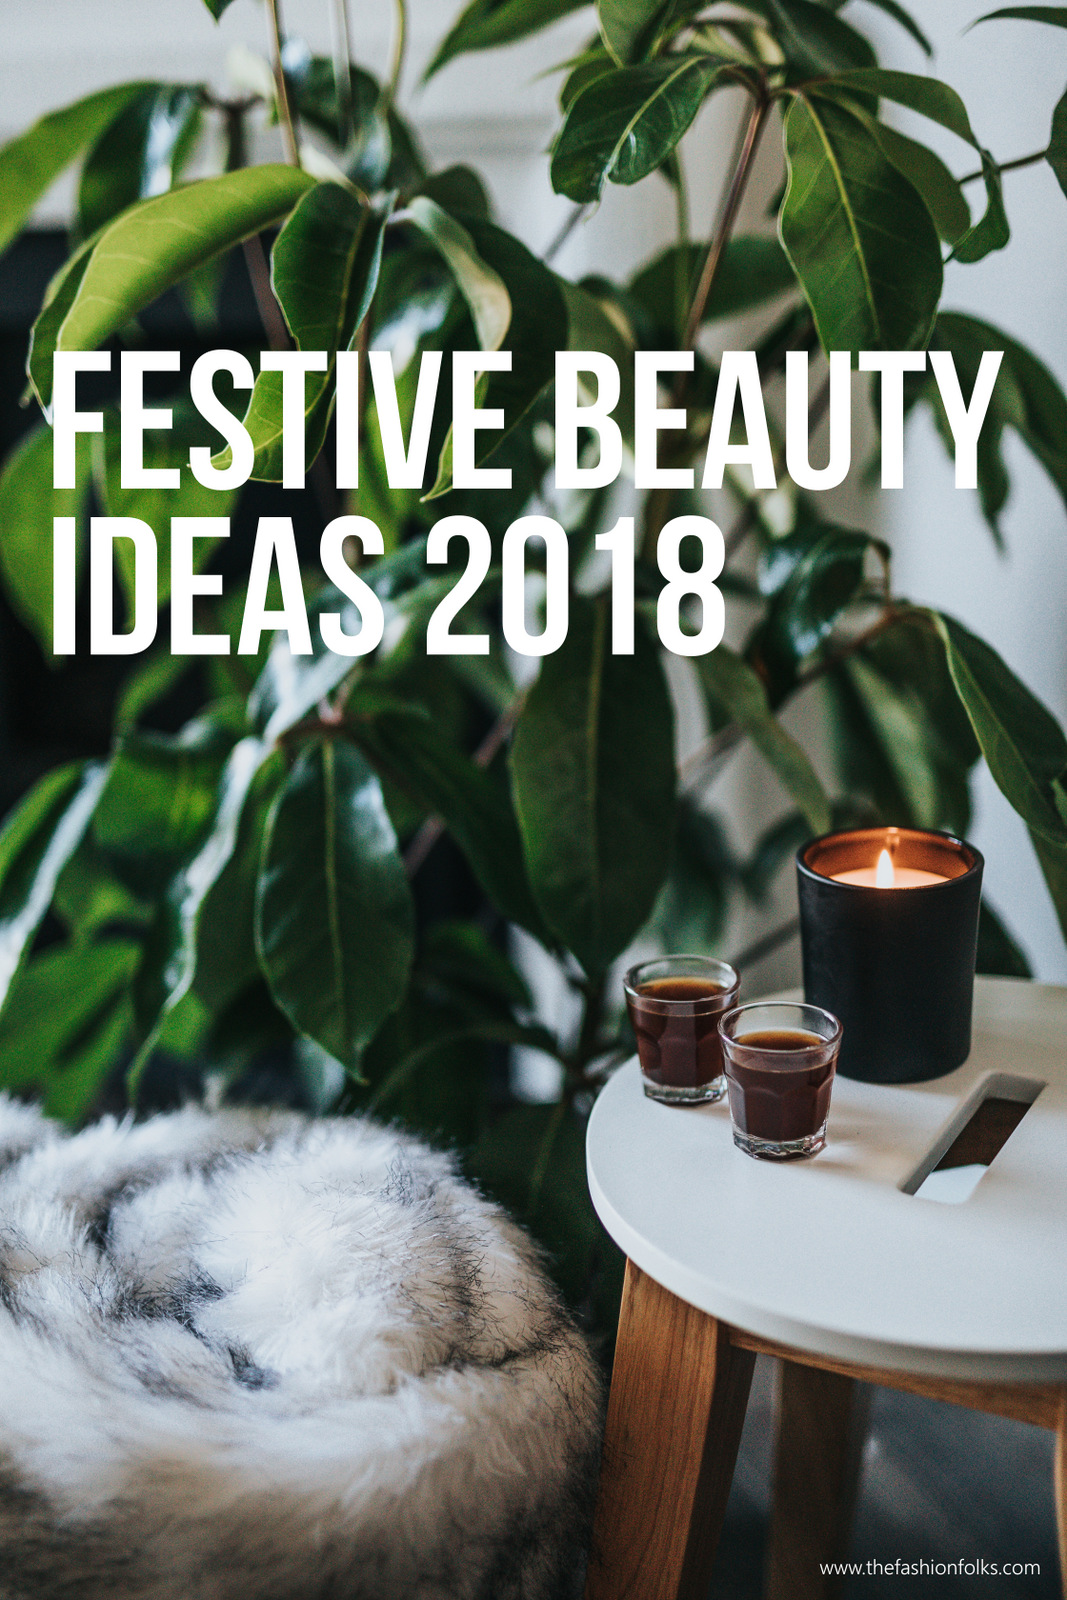 Festive Beauty Ideas 2018